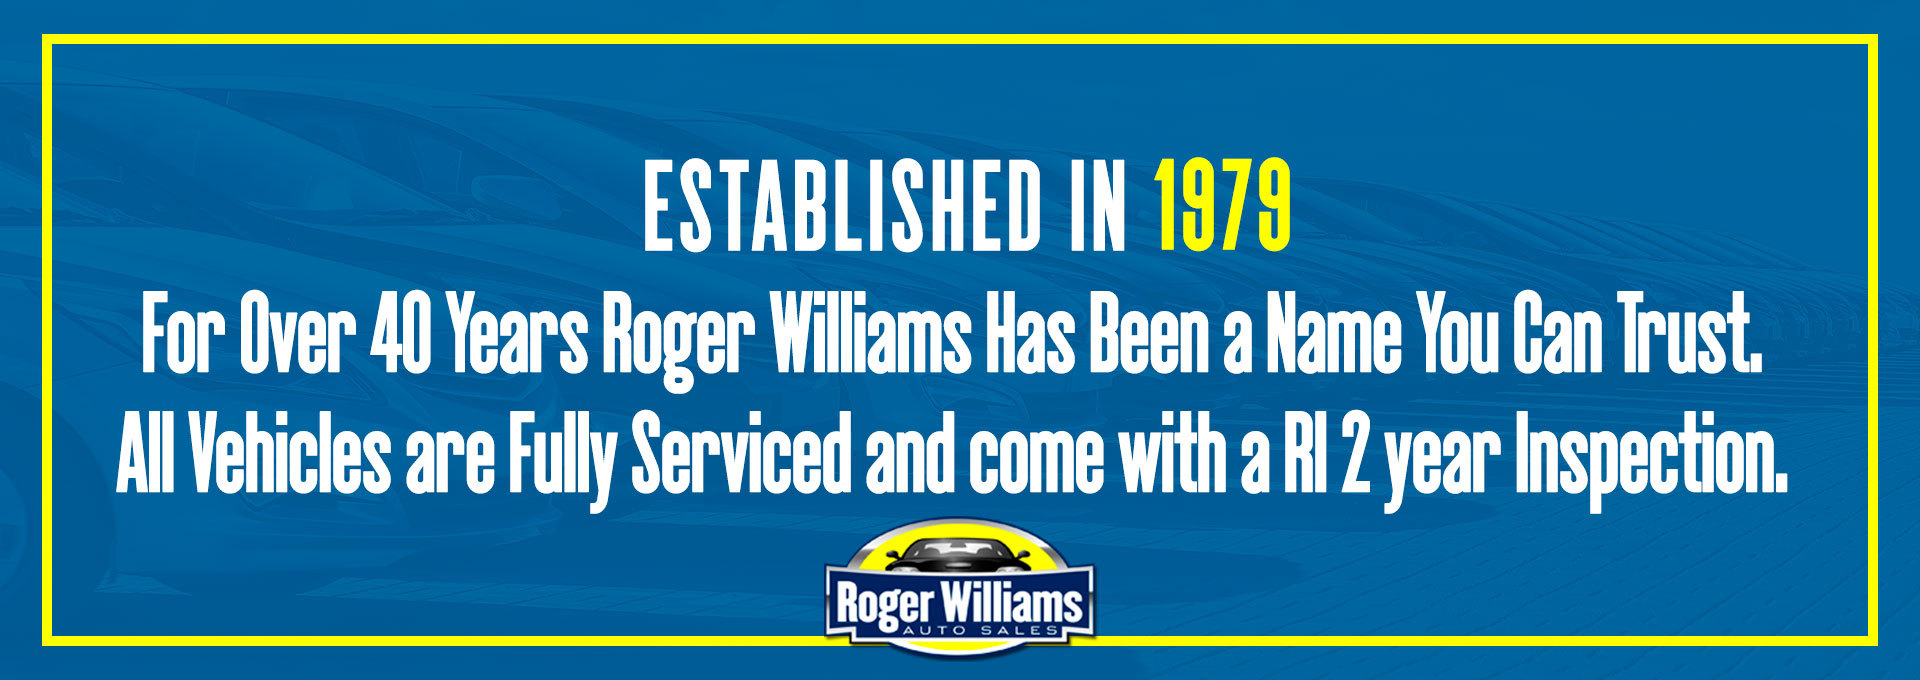 Happy 40th Anniversary to Roger Williams Auto Sales